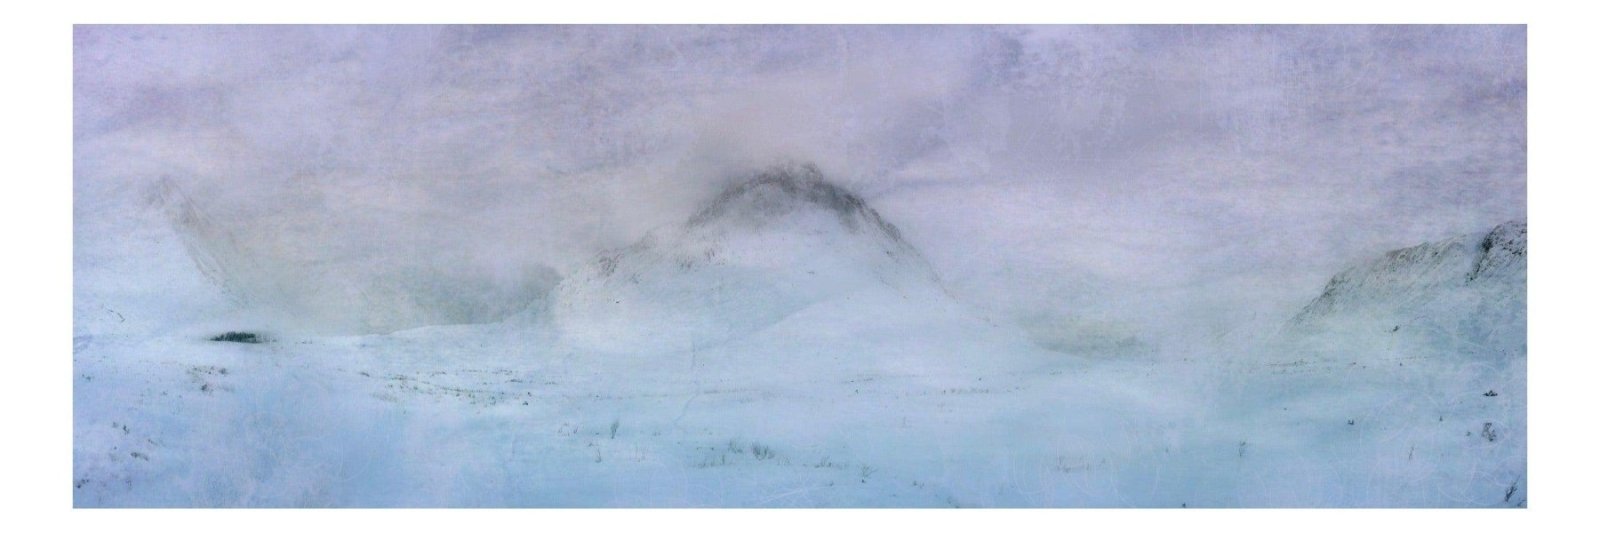 Buachaille Etive Mòr Snow Glencoe-Panoramic Prints-Glencoe Art Gallery-Paintings, Prints, Homeware, Art Gifts From Scotland By Scottish Artist Kevin Hunter